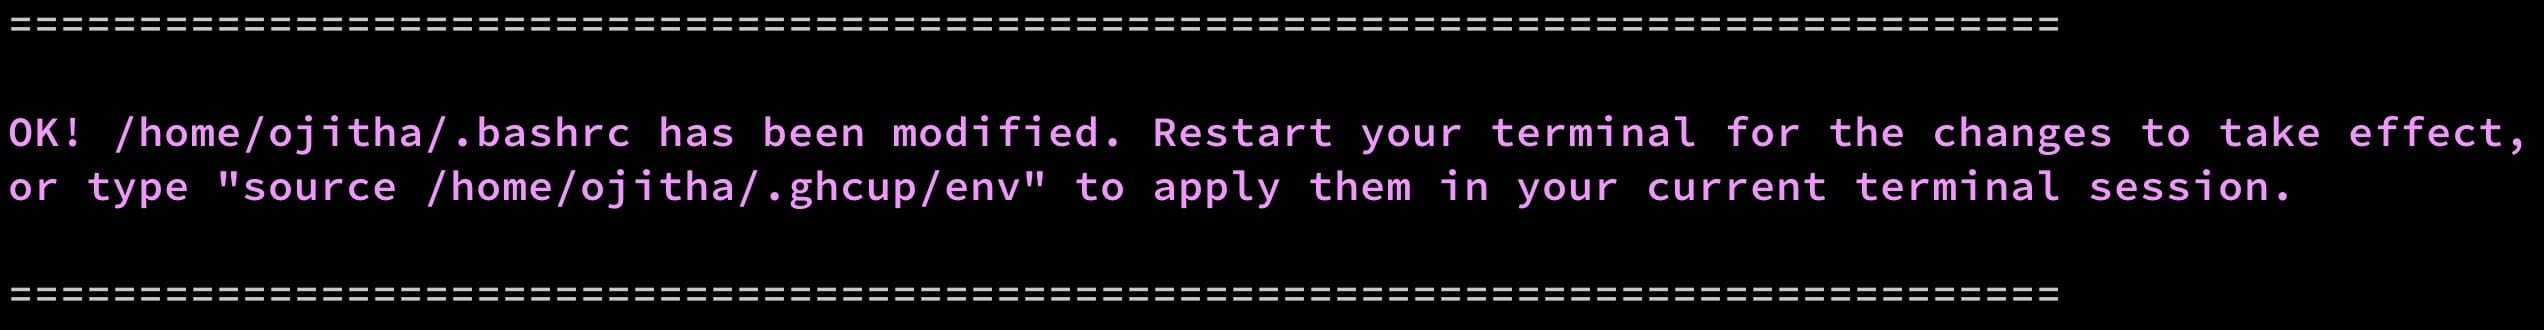 Haskell installation message